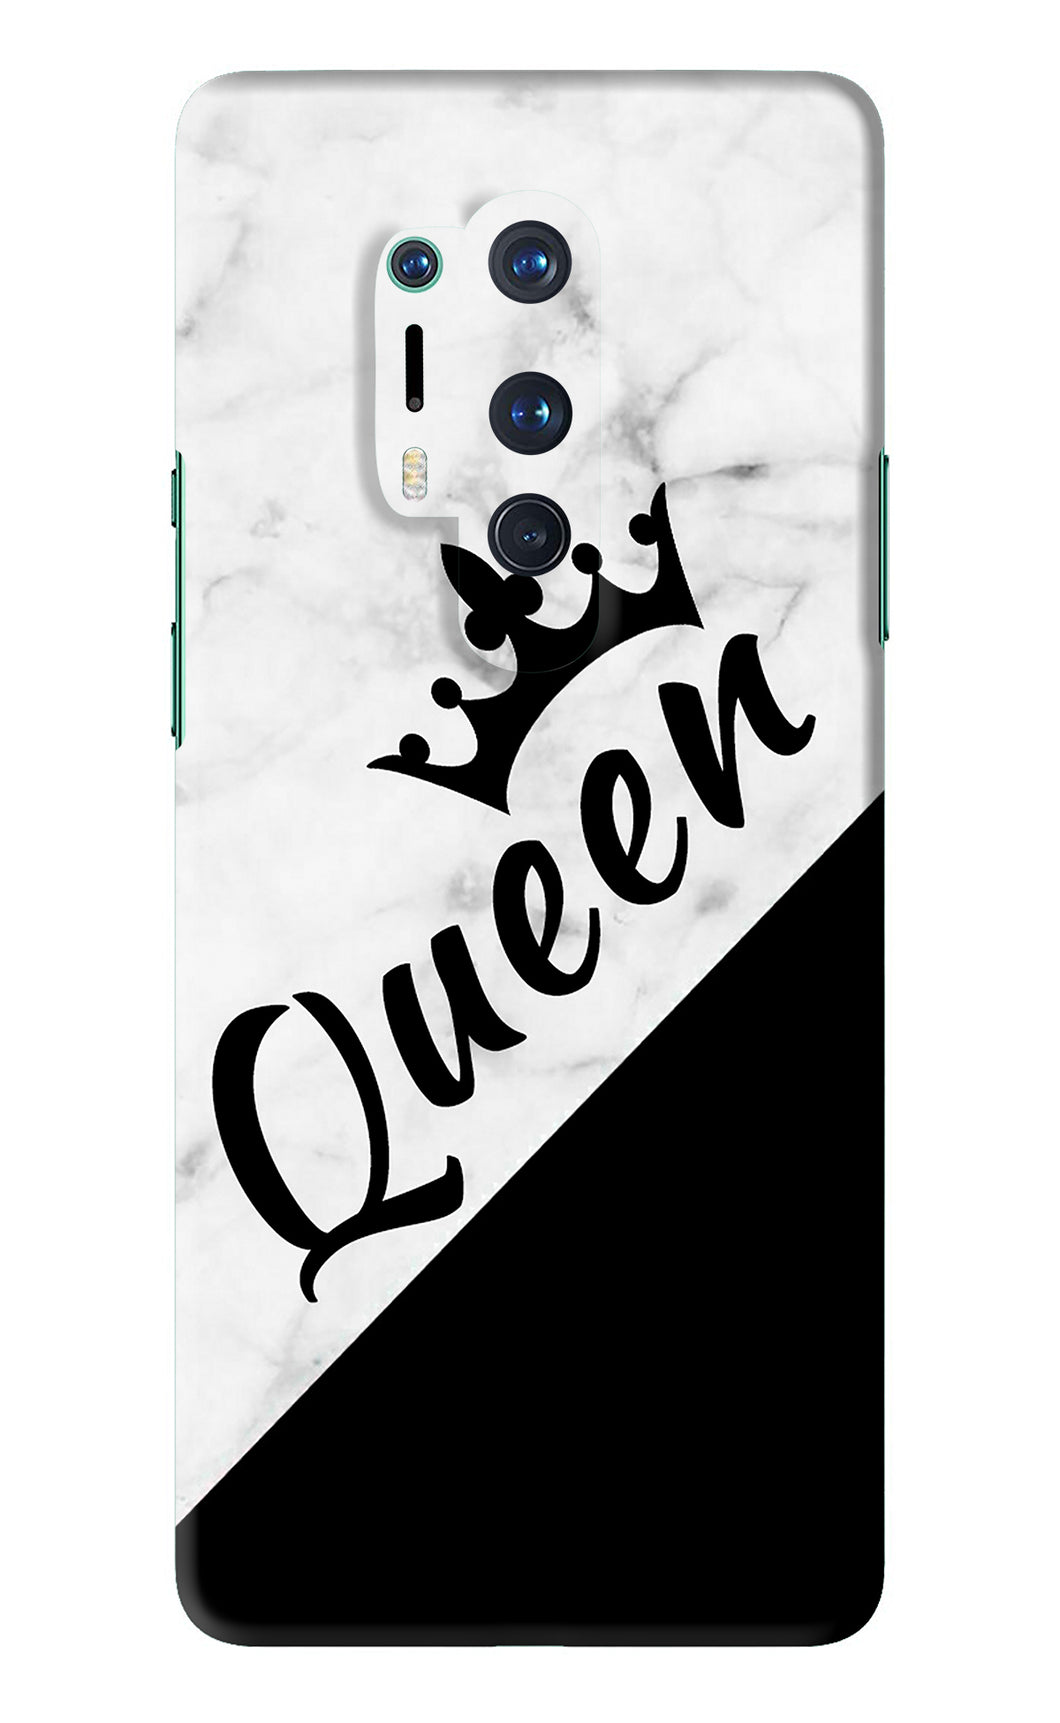 Queen OnePlus 8 Pro Back Skin Wrap